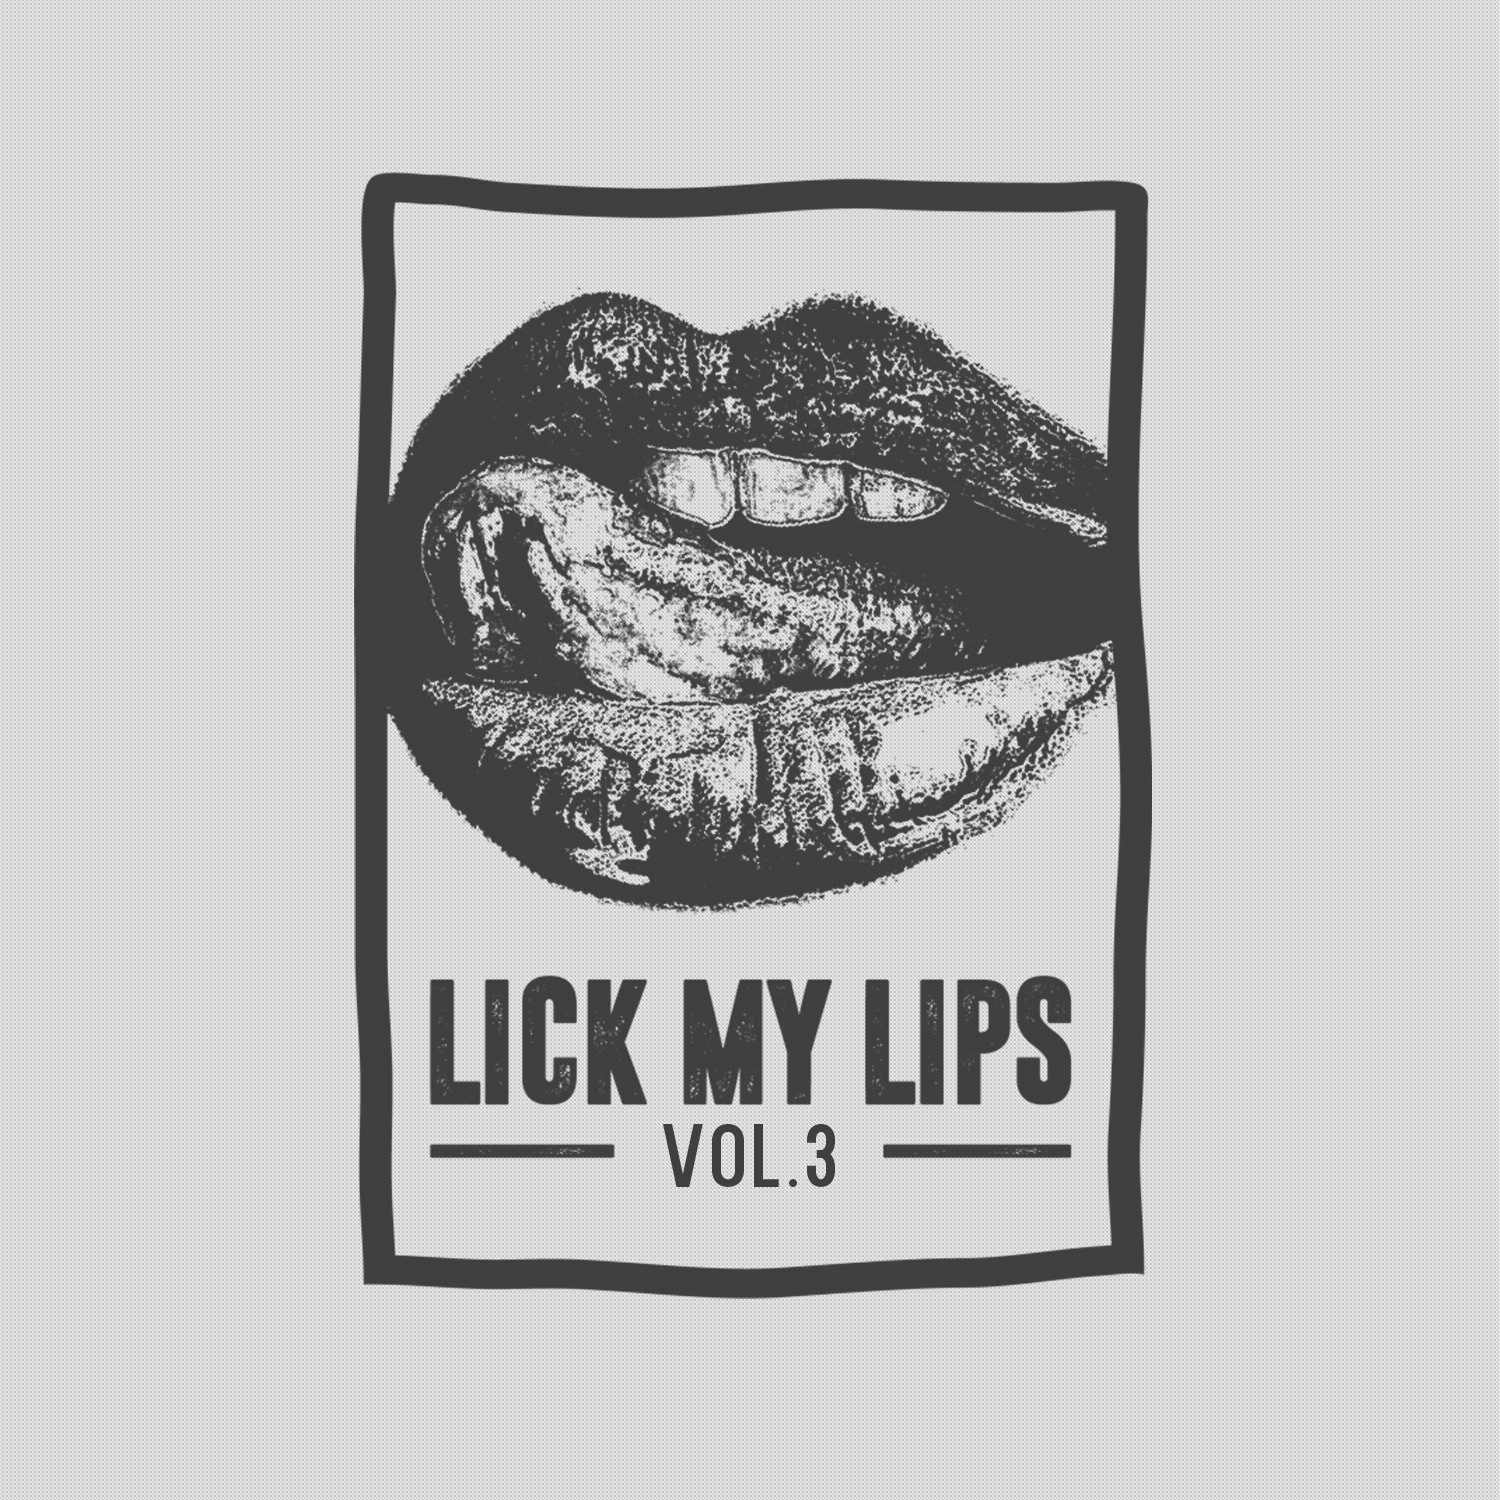 Lick My Lips, Vol. 3